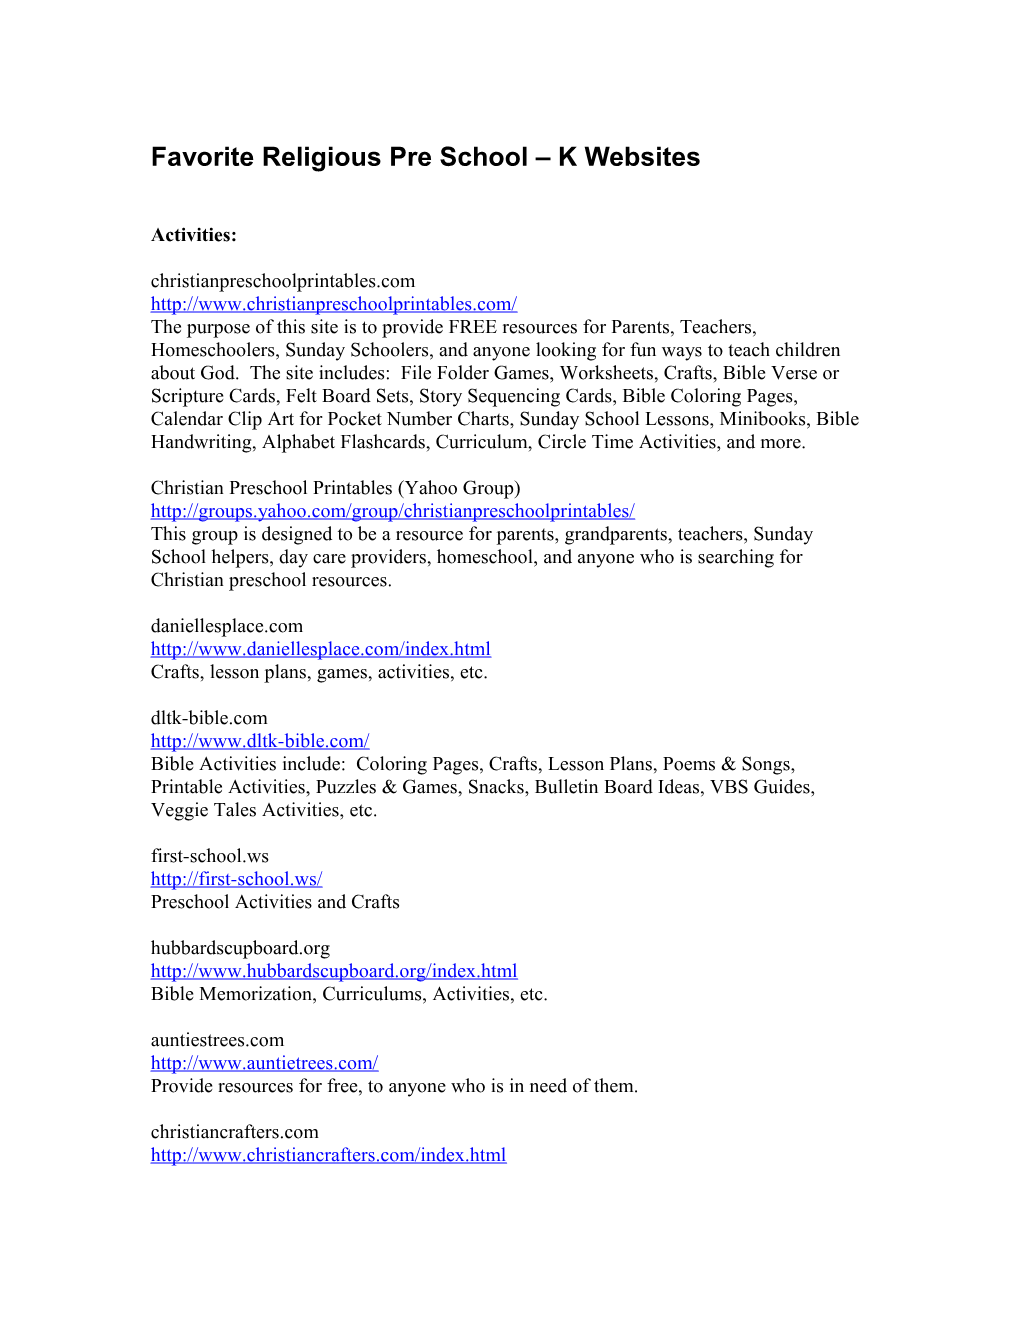 Favorite Religious Pre School K Websites